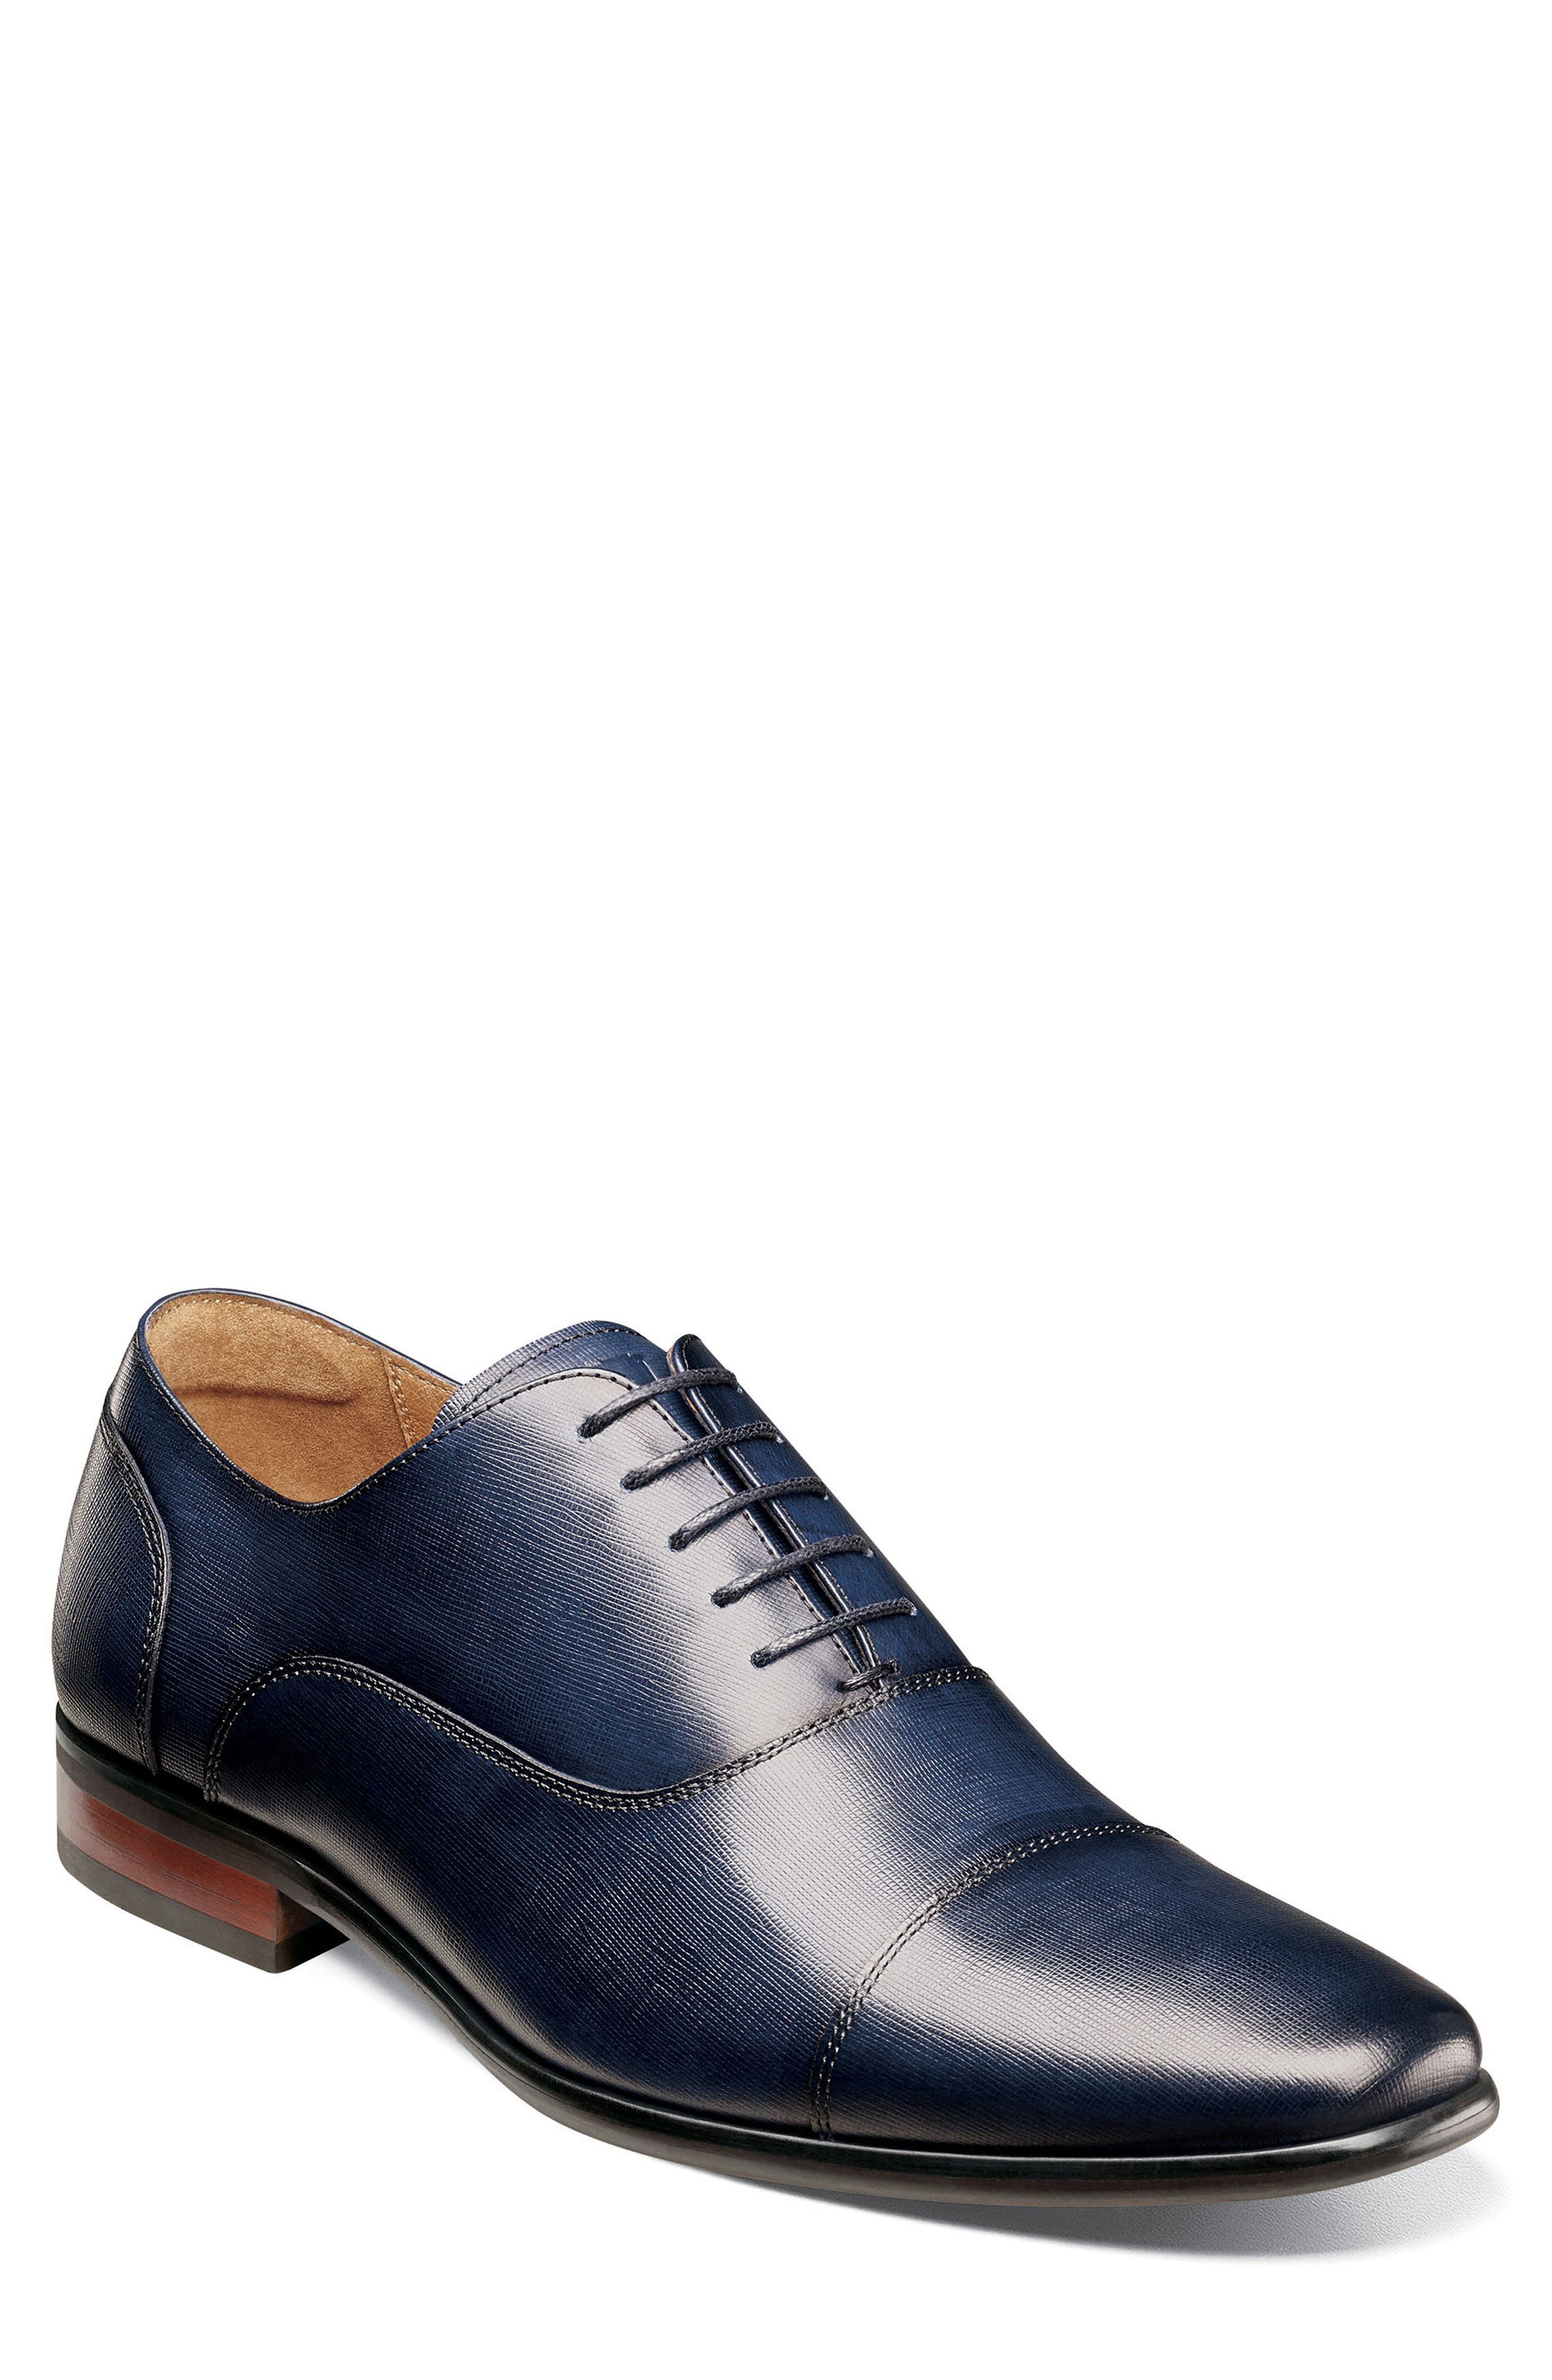 Mens Shoes Lace-ups Oxford shoes for Men Blue Hogan Lace-up Shoes in Dark Blue 